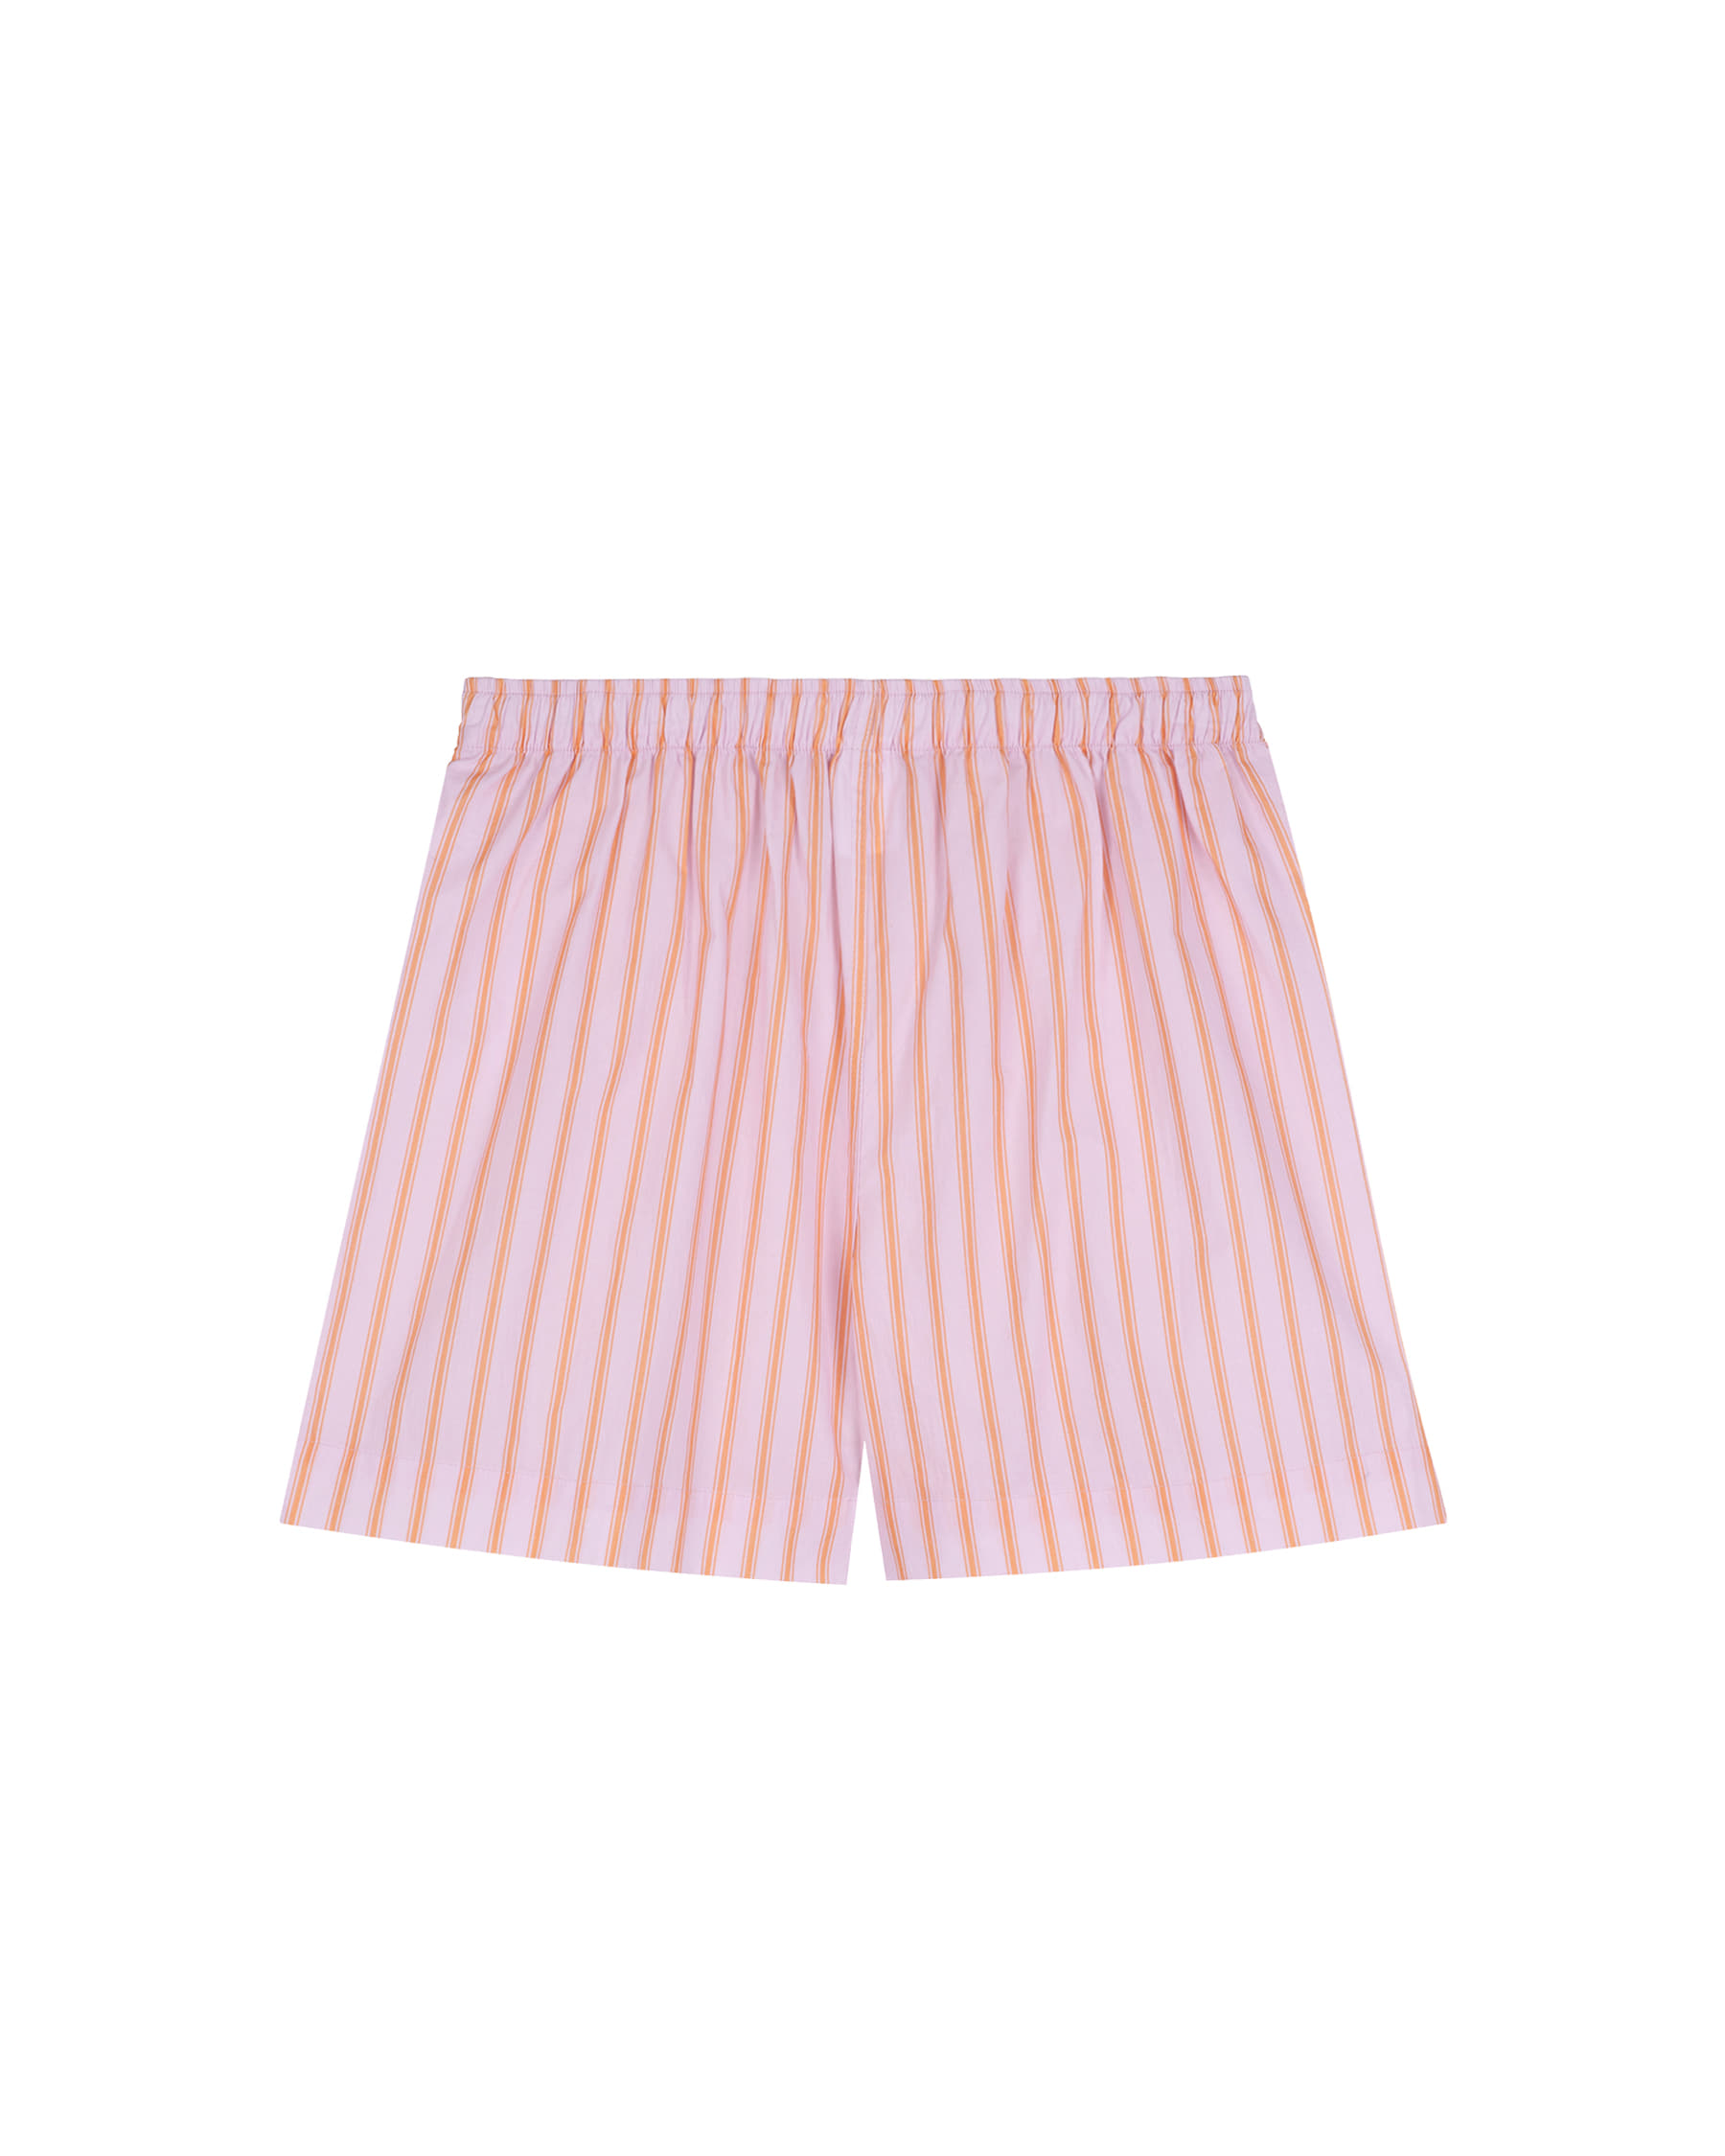 Dream a Dream Stripe Shorts